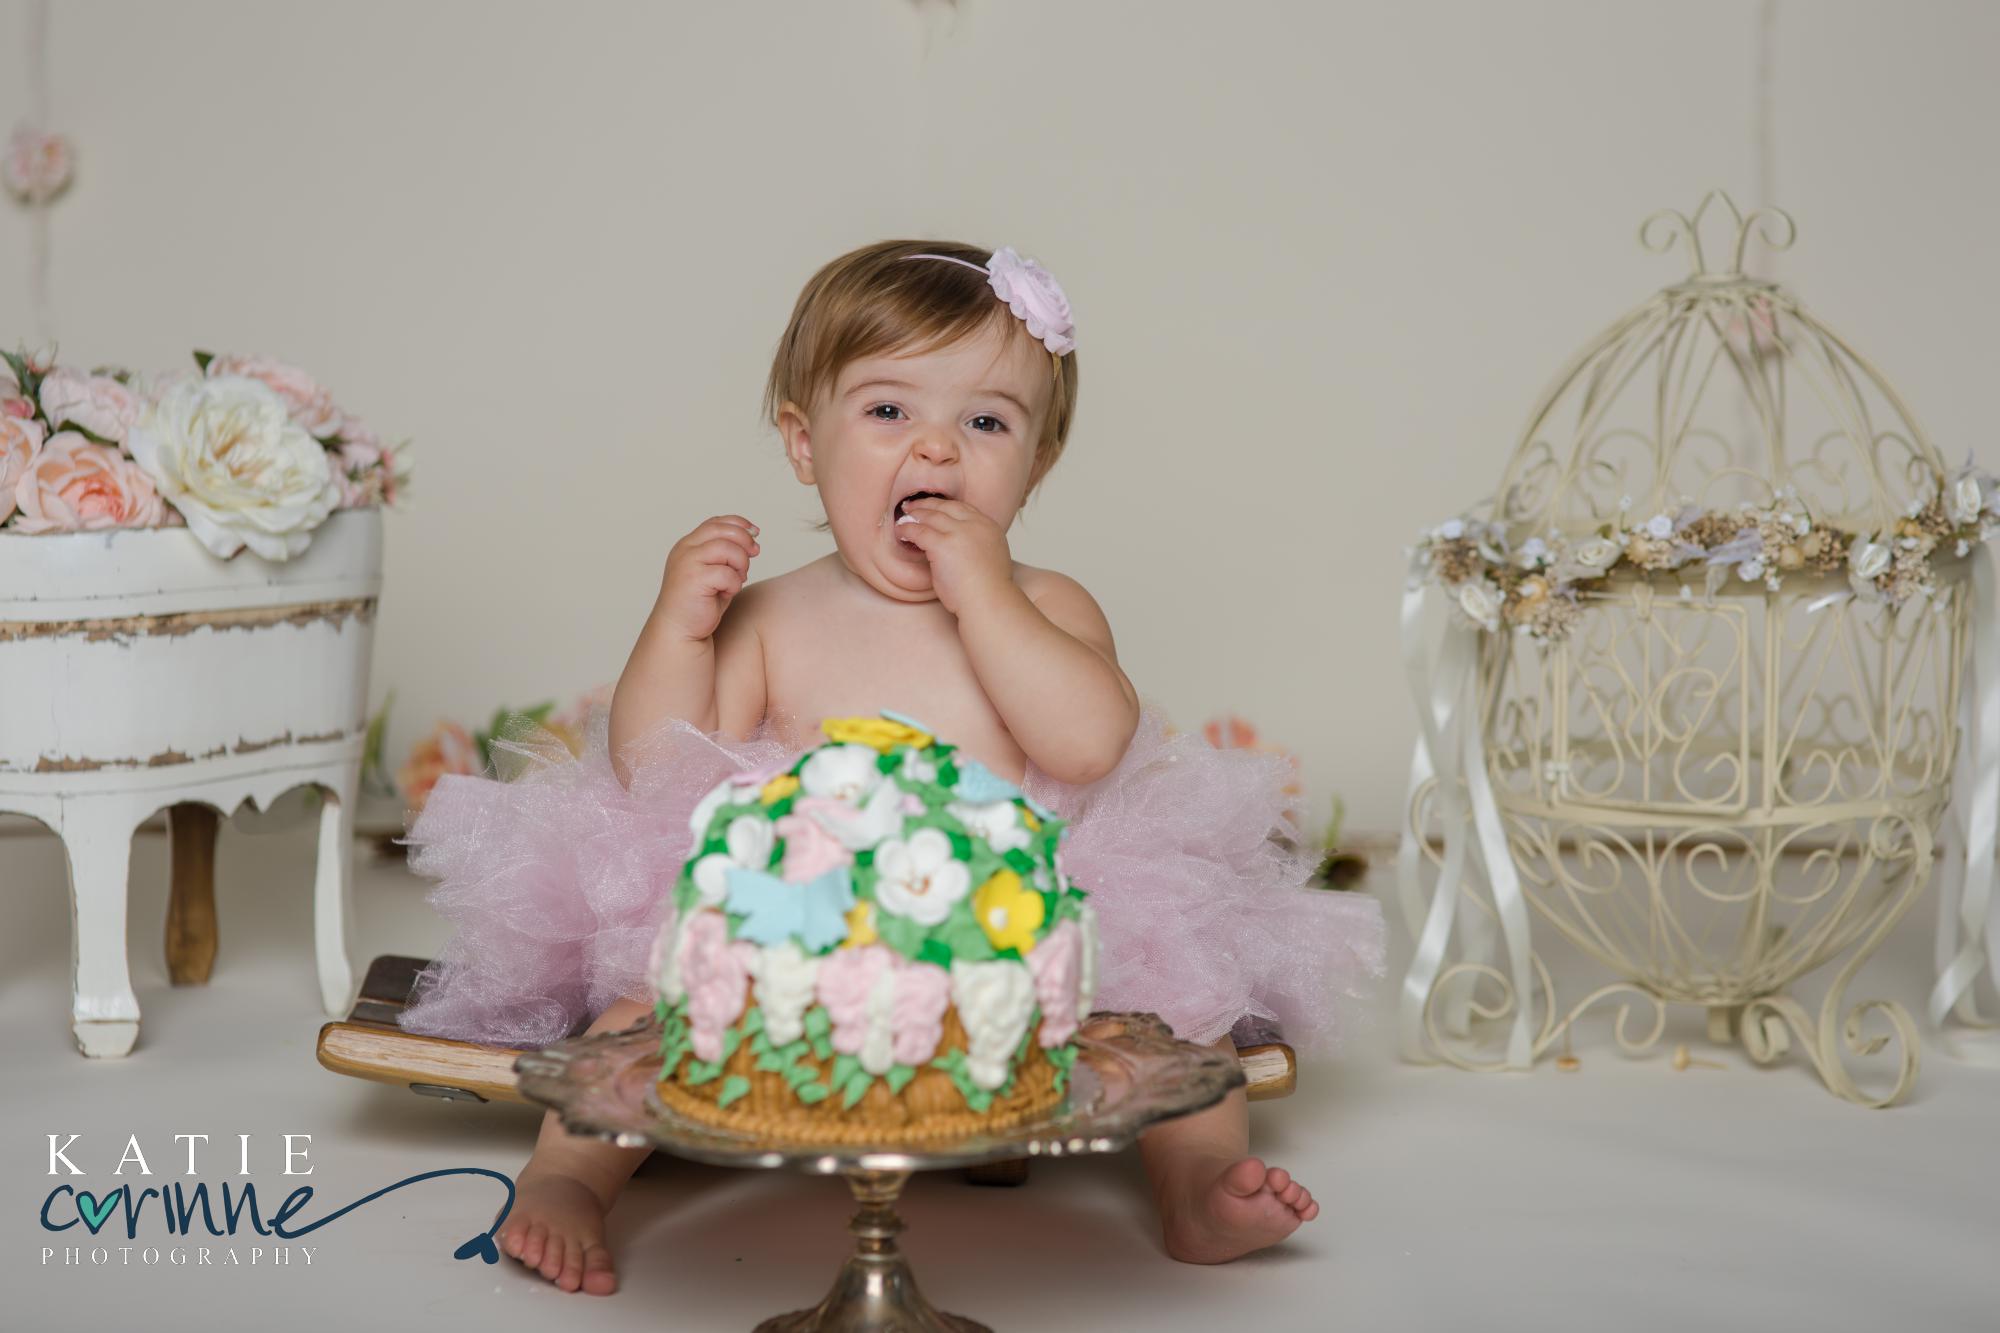 baby tasting her smash cake